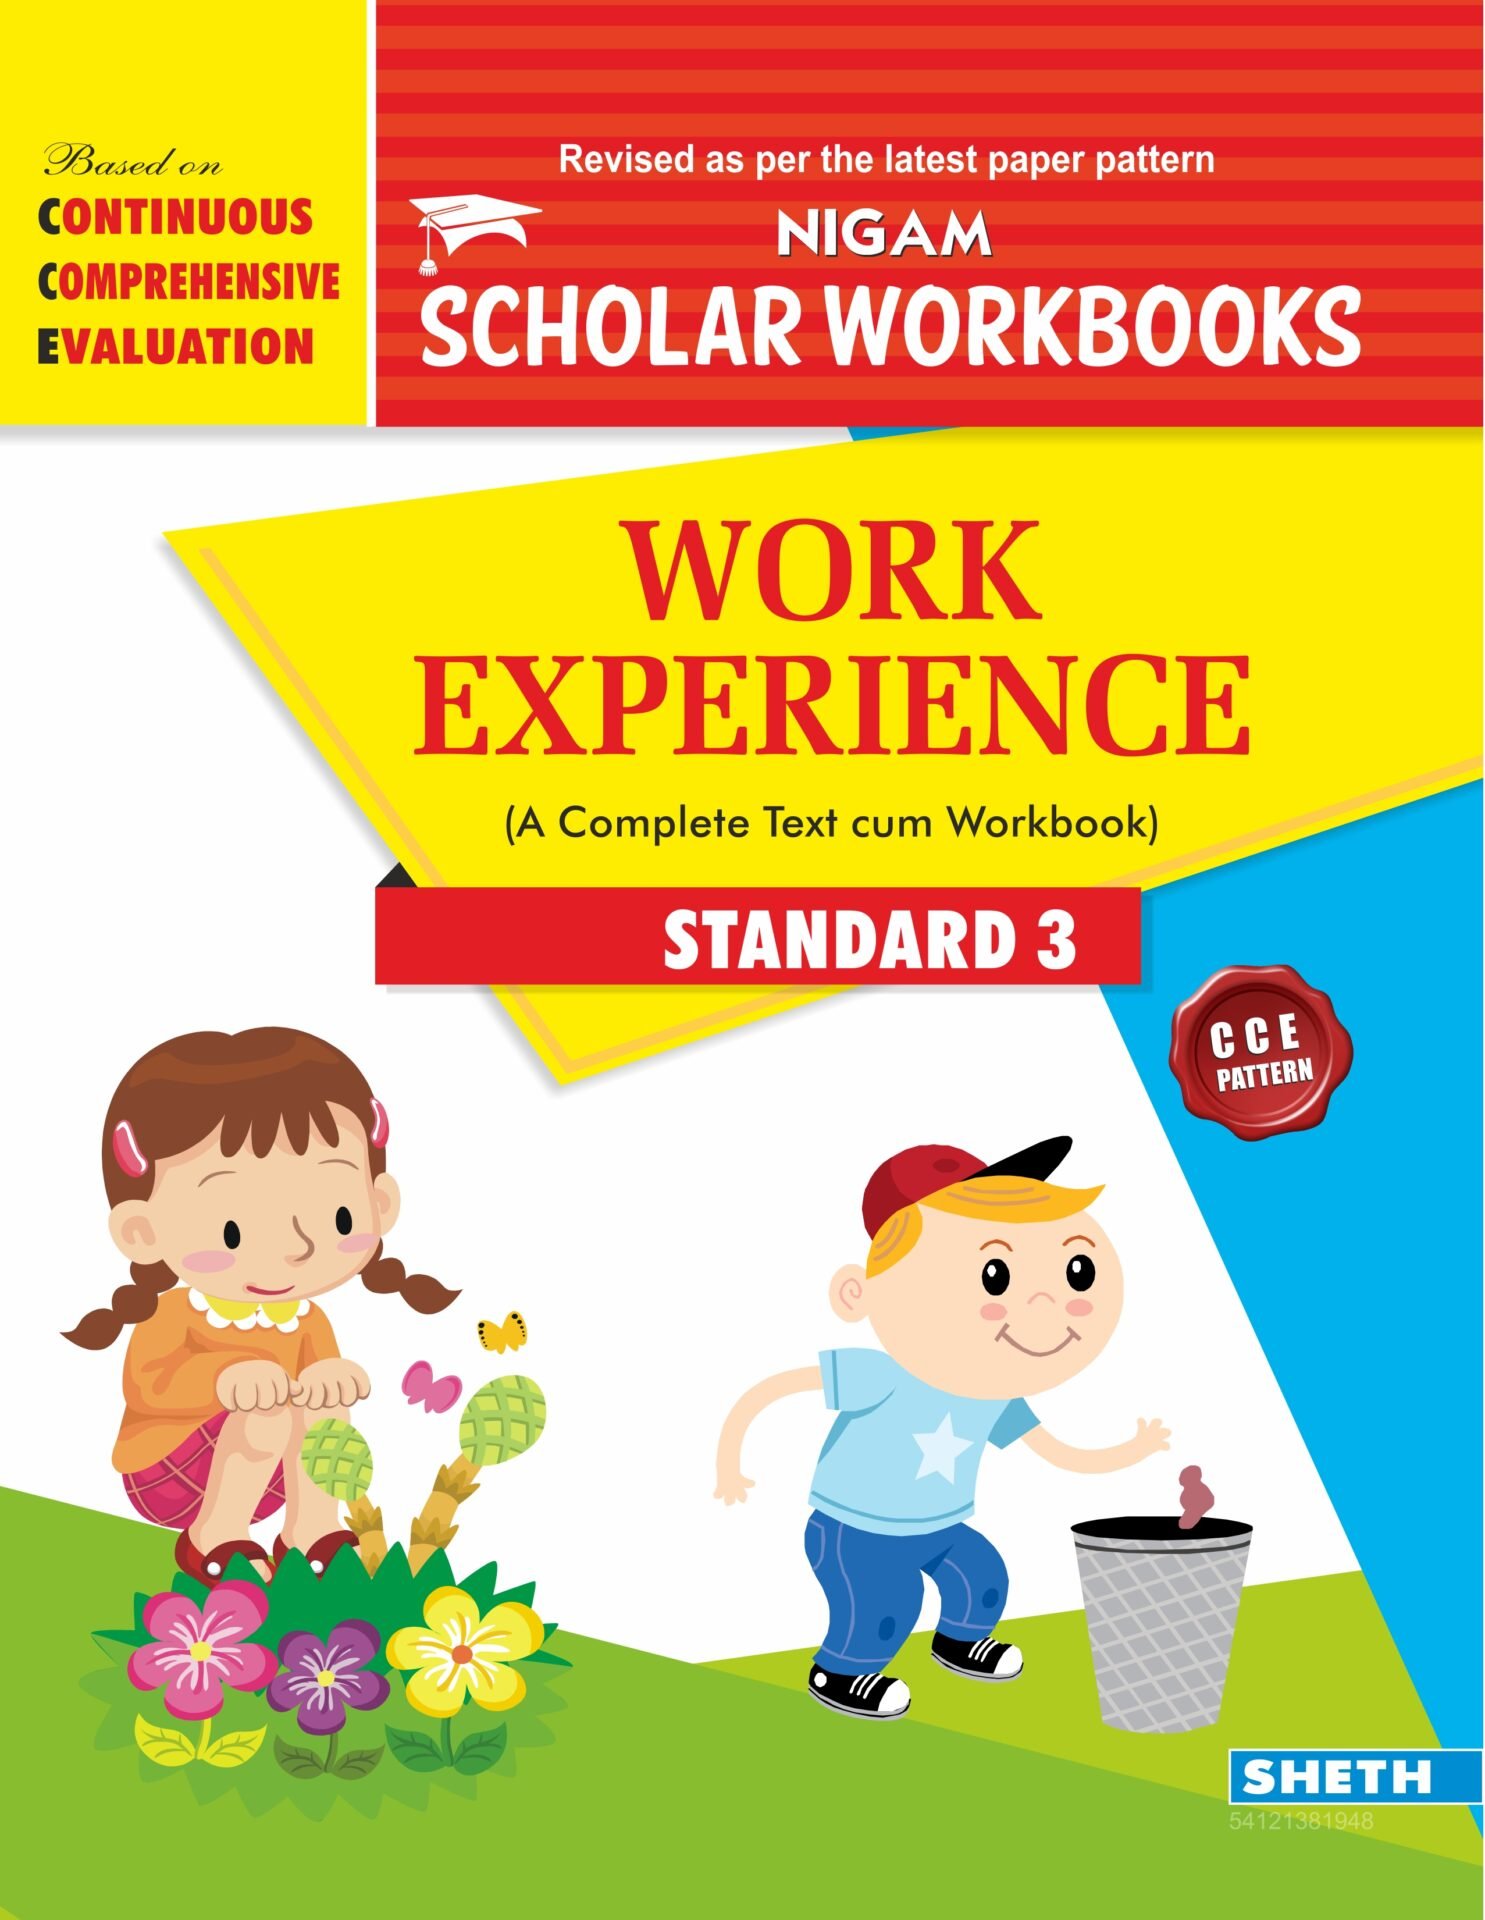 CCE Pattern Nigam Scholar Workbooks Work Experience Standard 3 1